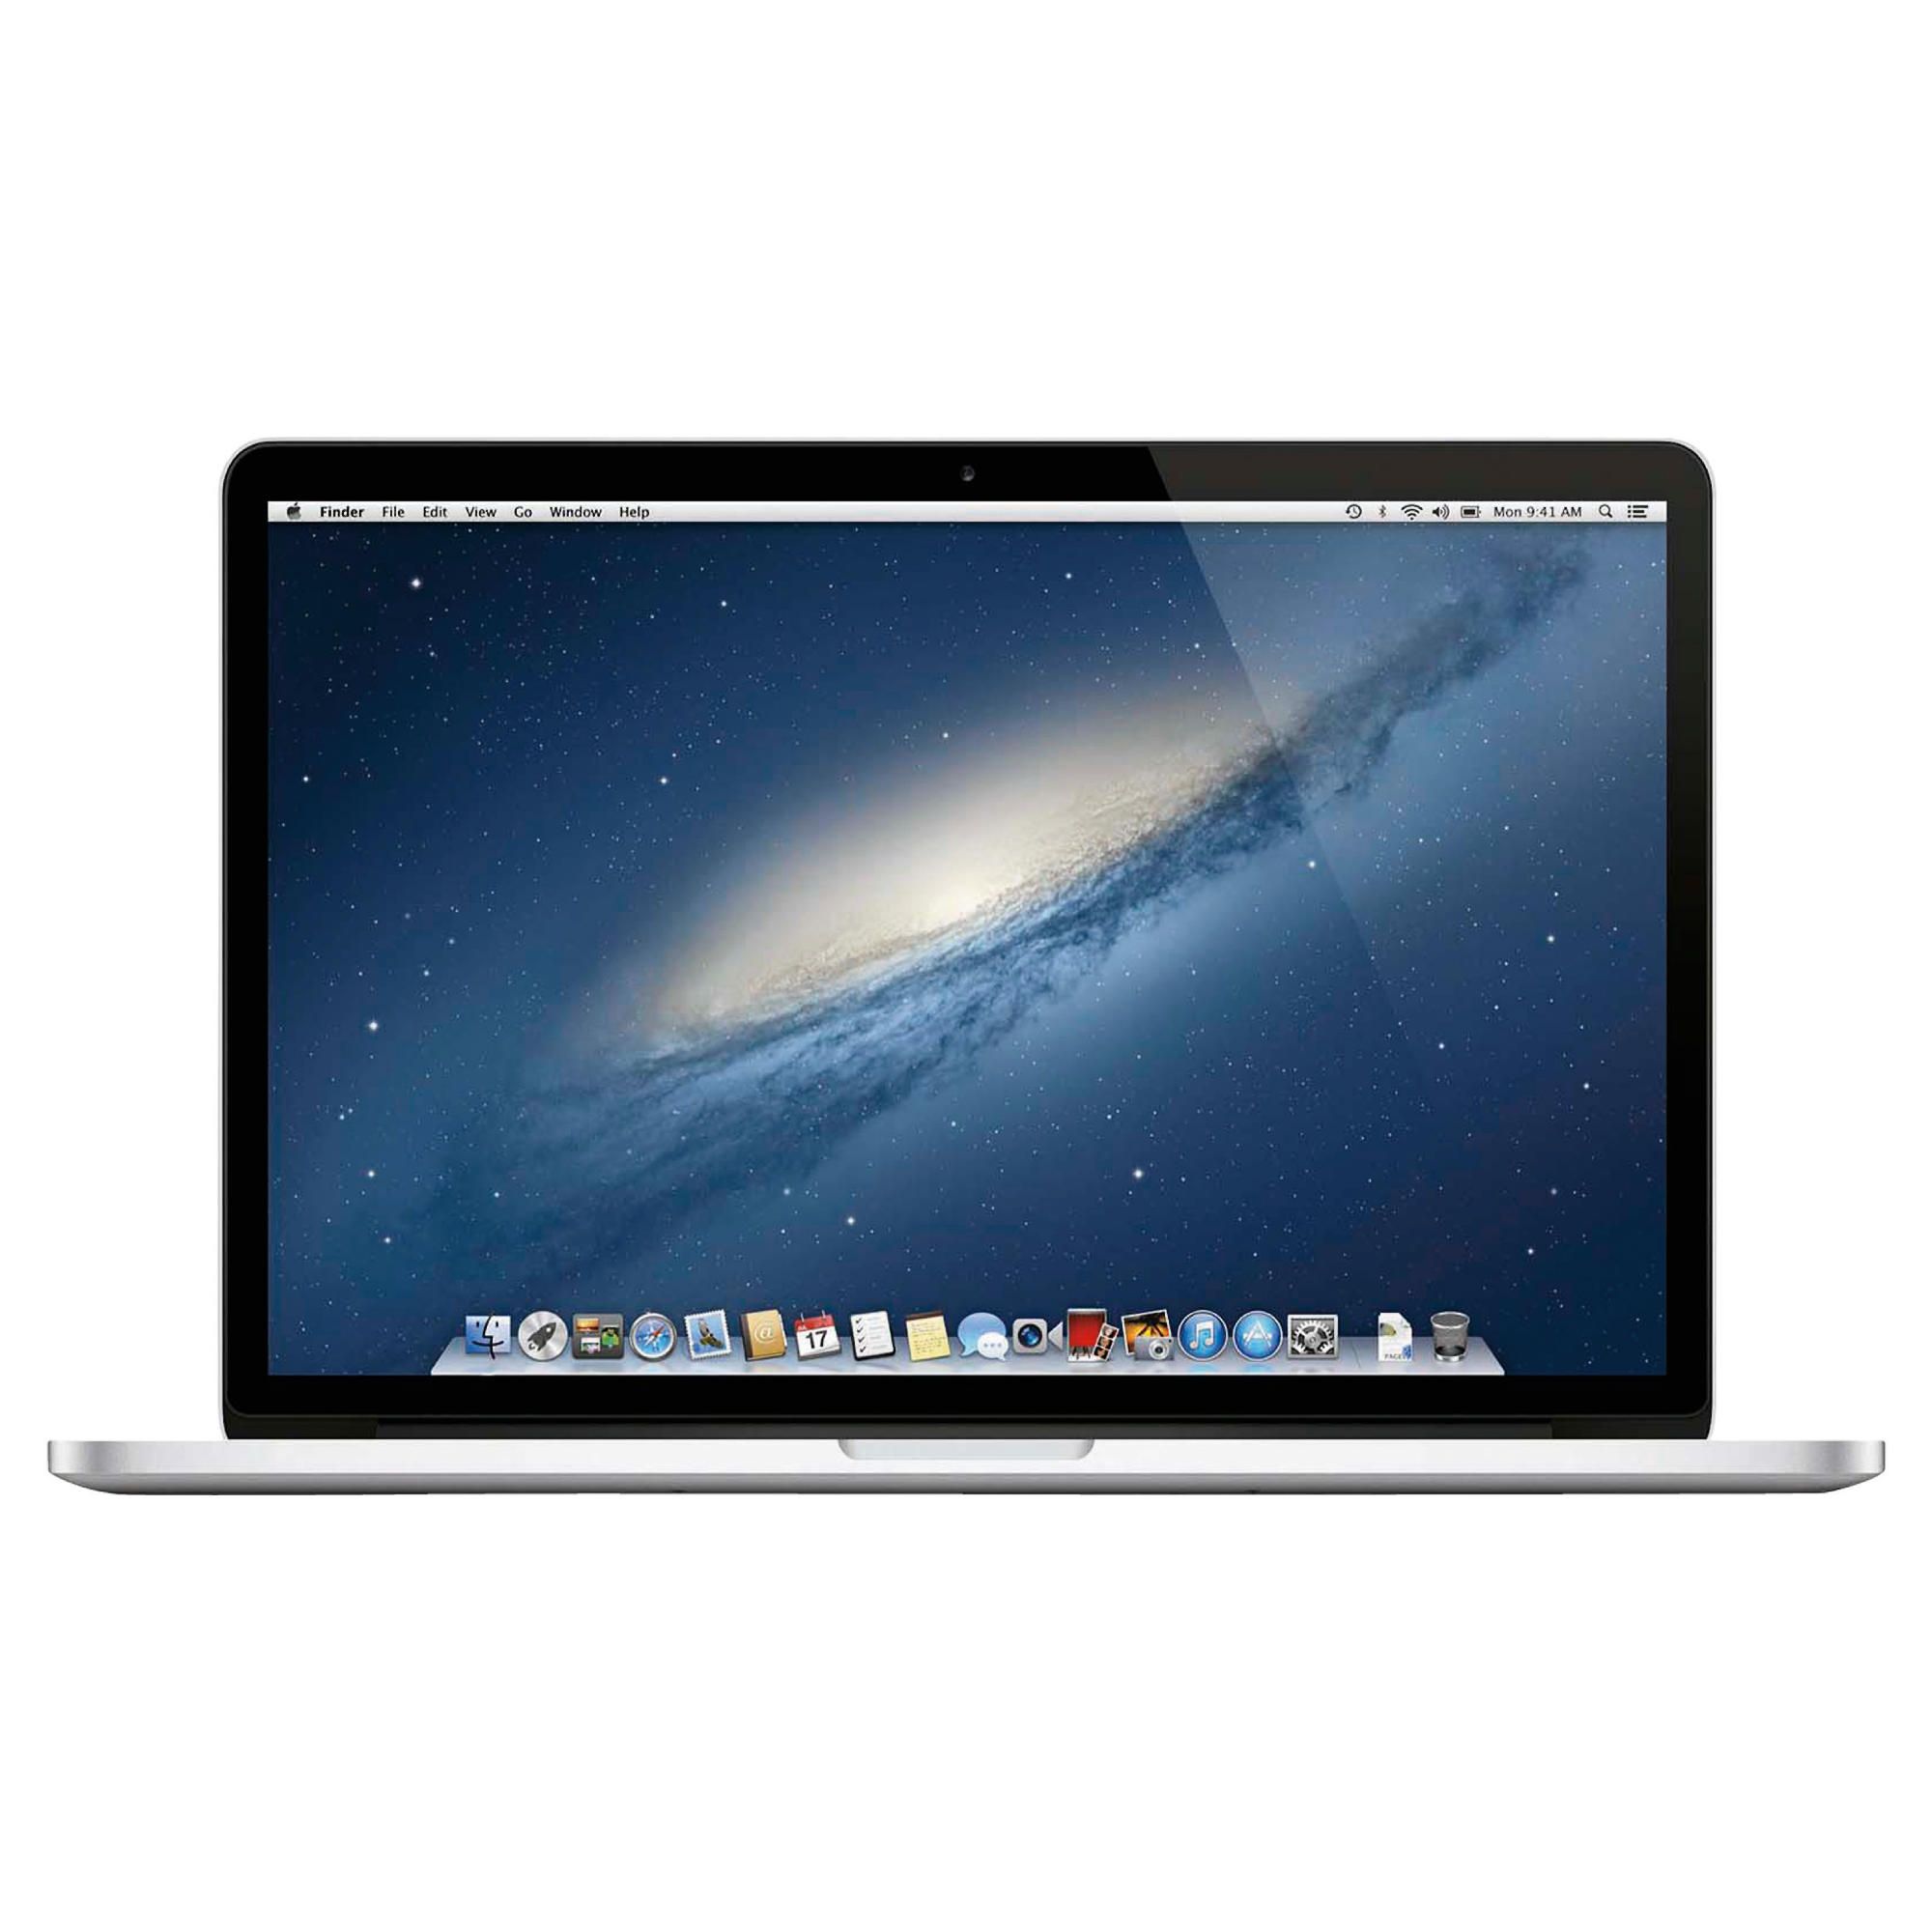 MacBook Pro 15.4” with Retina display ME293B/A 2.0GHZ 8GB 256GB Flash Drive